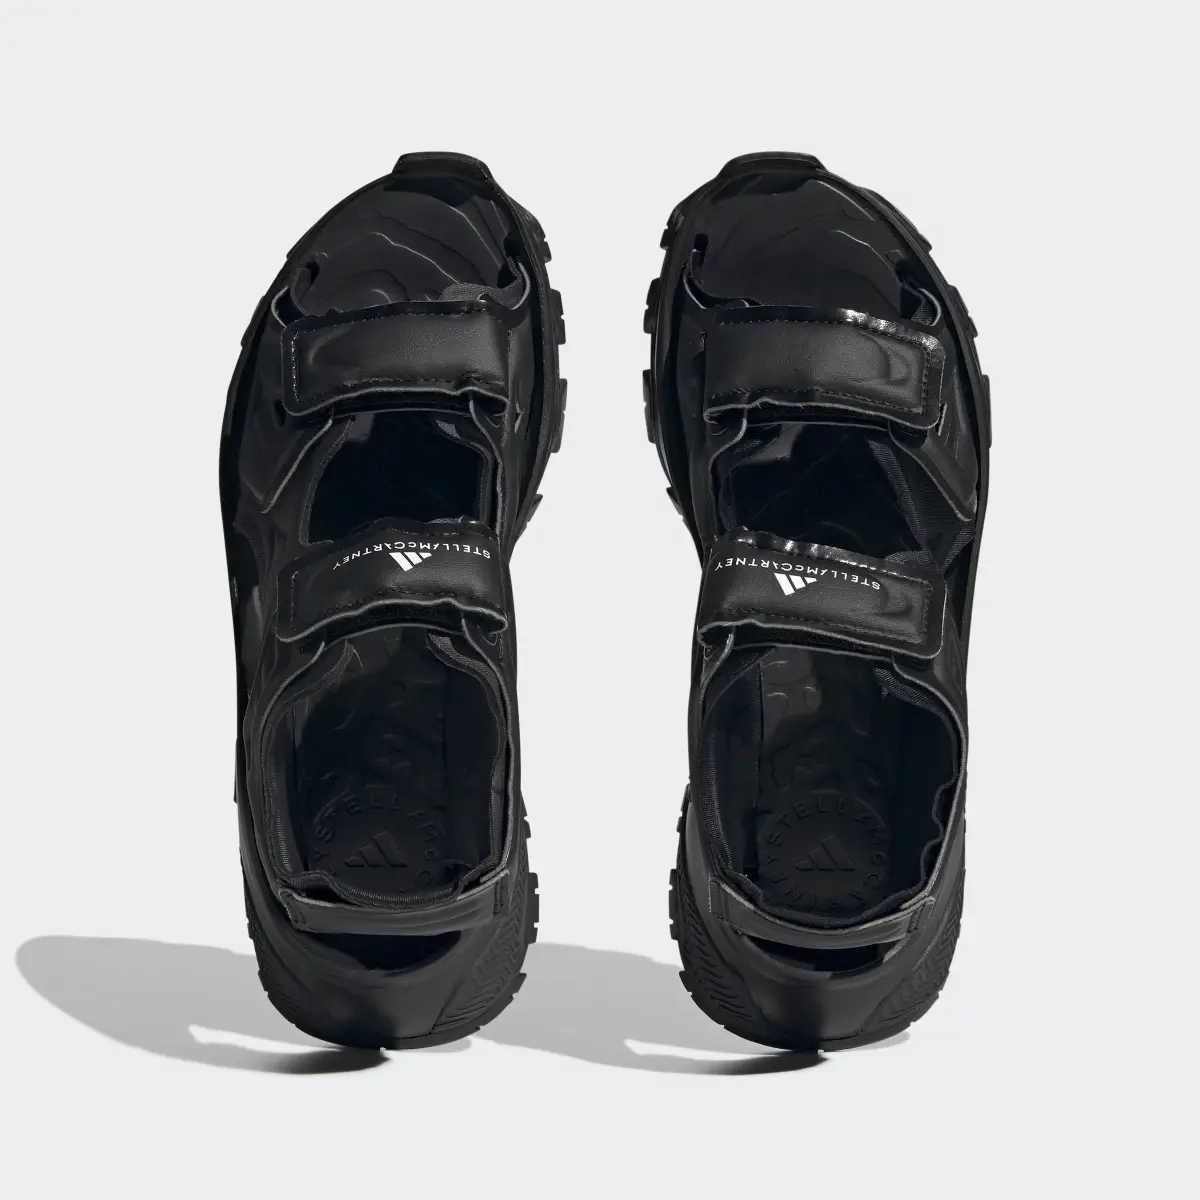 Adidas by Stella McCartney HIKA Outdoor Sandals. 3